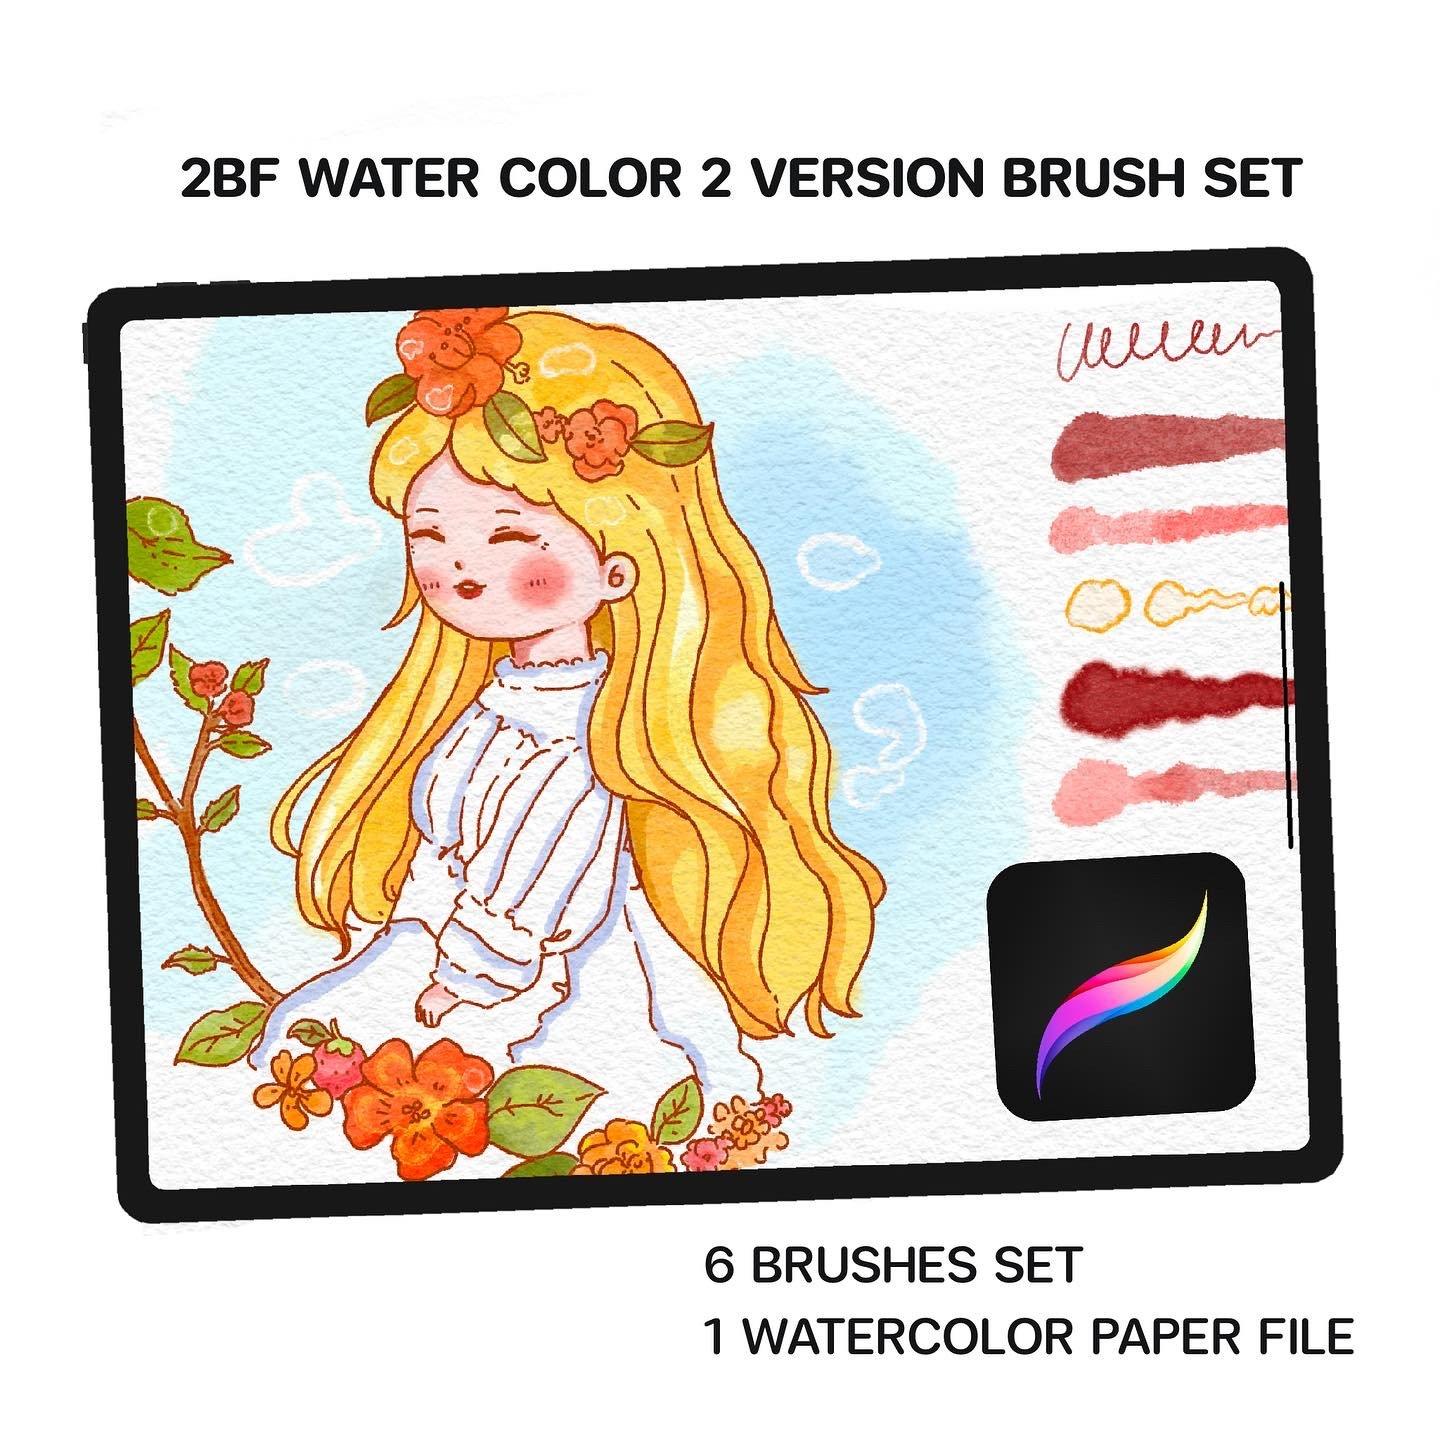 2BF Water color 2 Version Brush Set